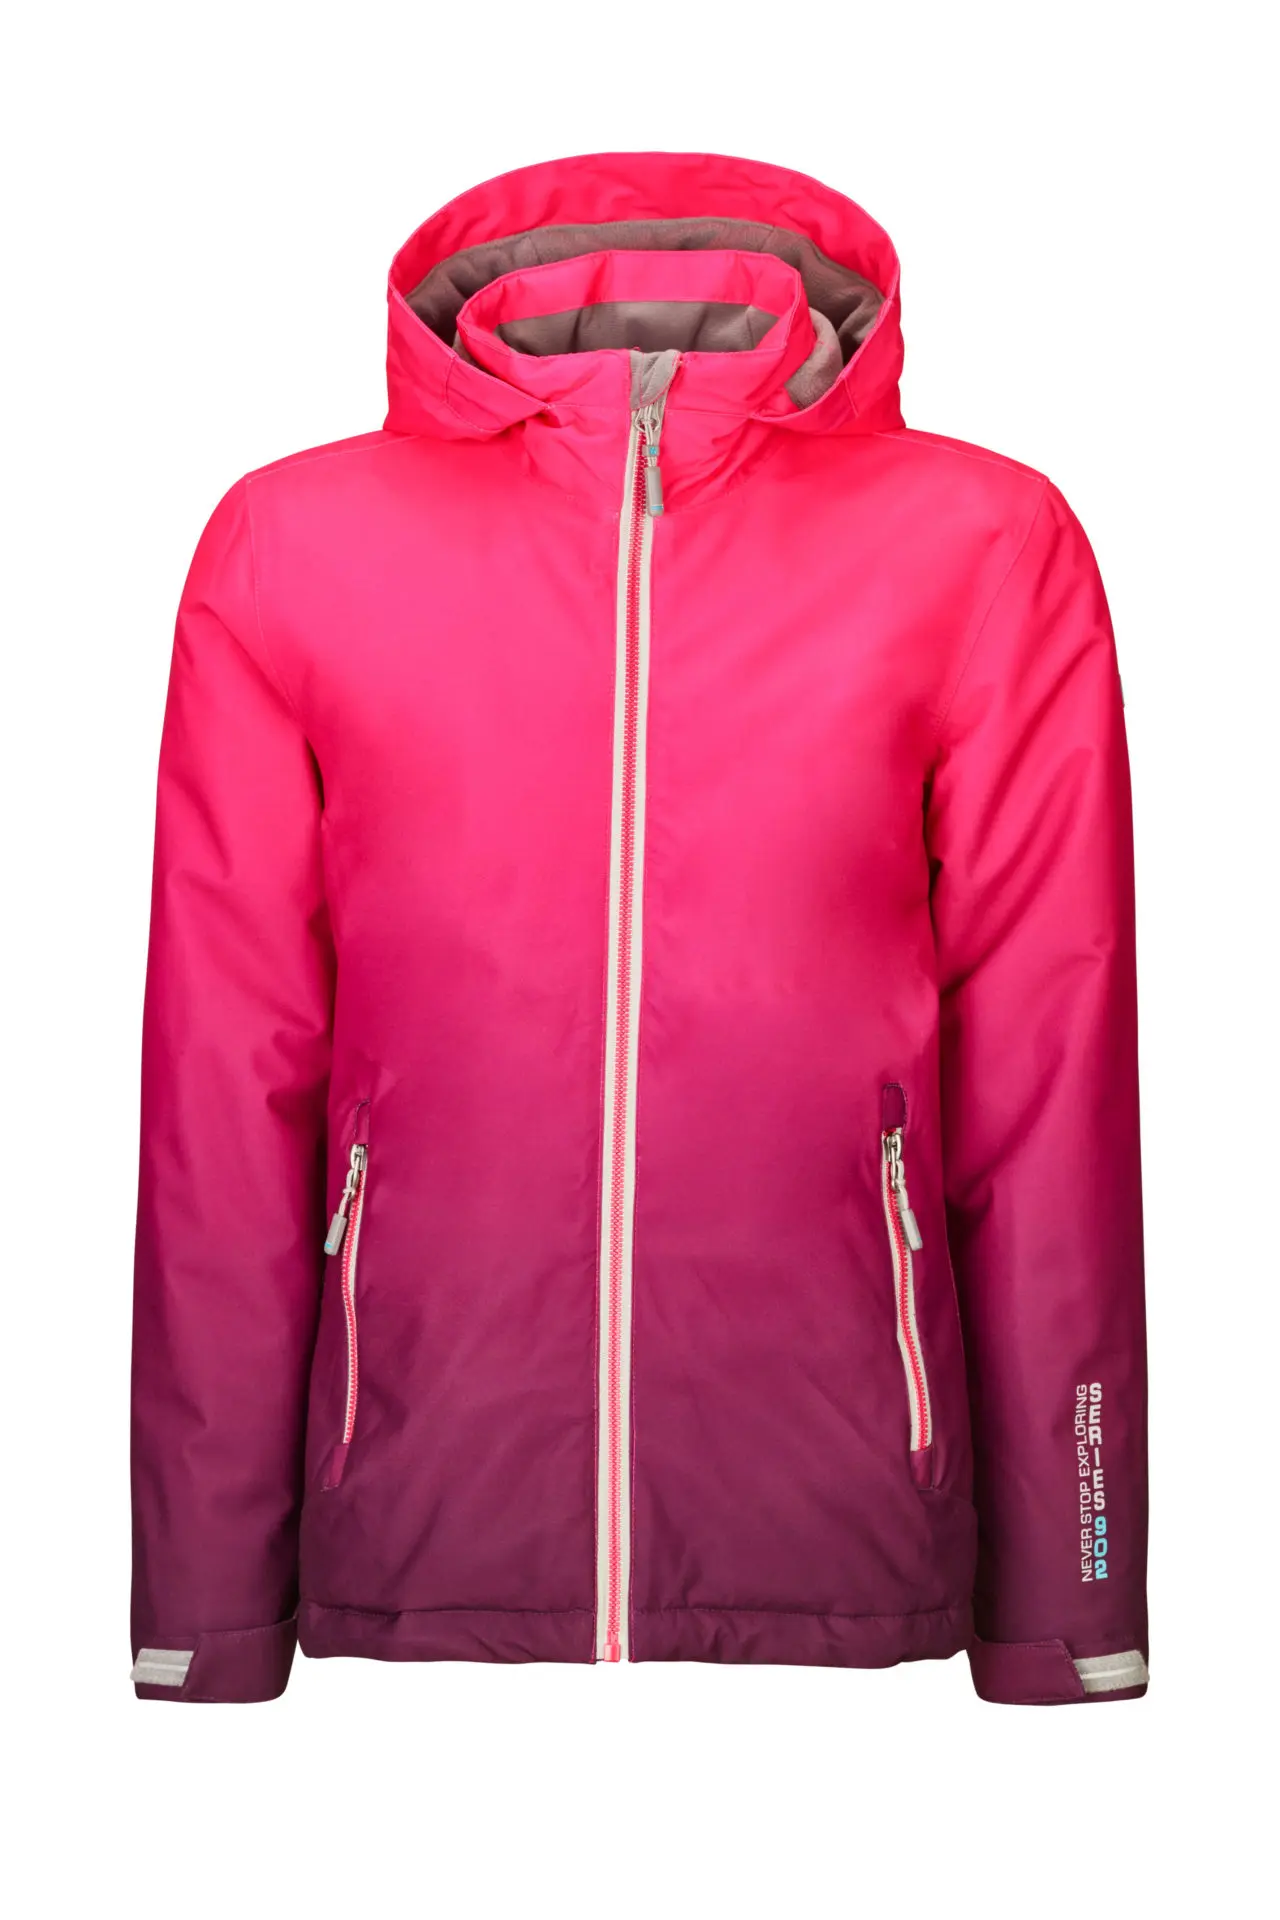 Killtec Girl\'s Grenda Jr Function Jacket with Hood - Northern Ski Works